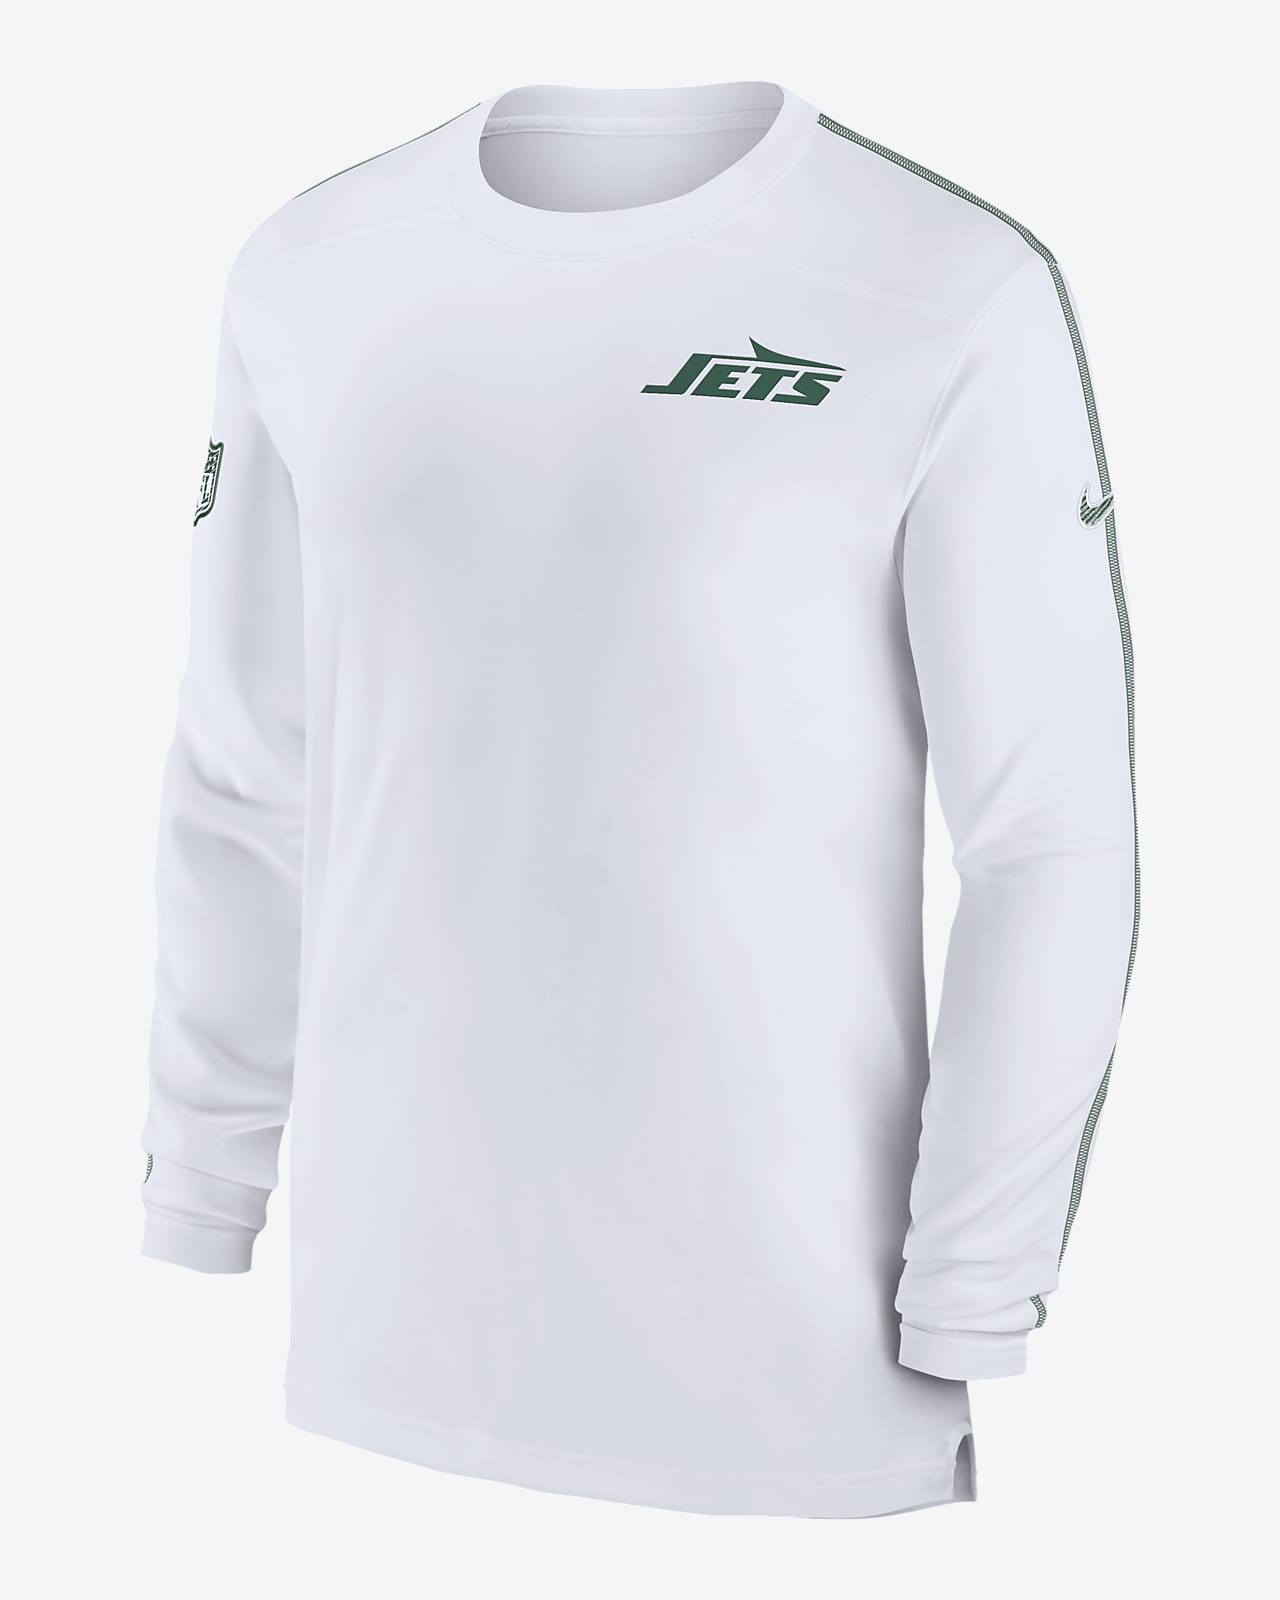 New York Jets Sideline Coach Men's Nike Dri-FIT NFL Long-Sleeve Top